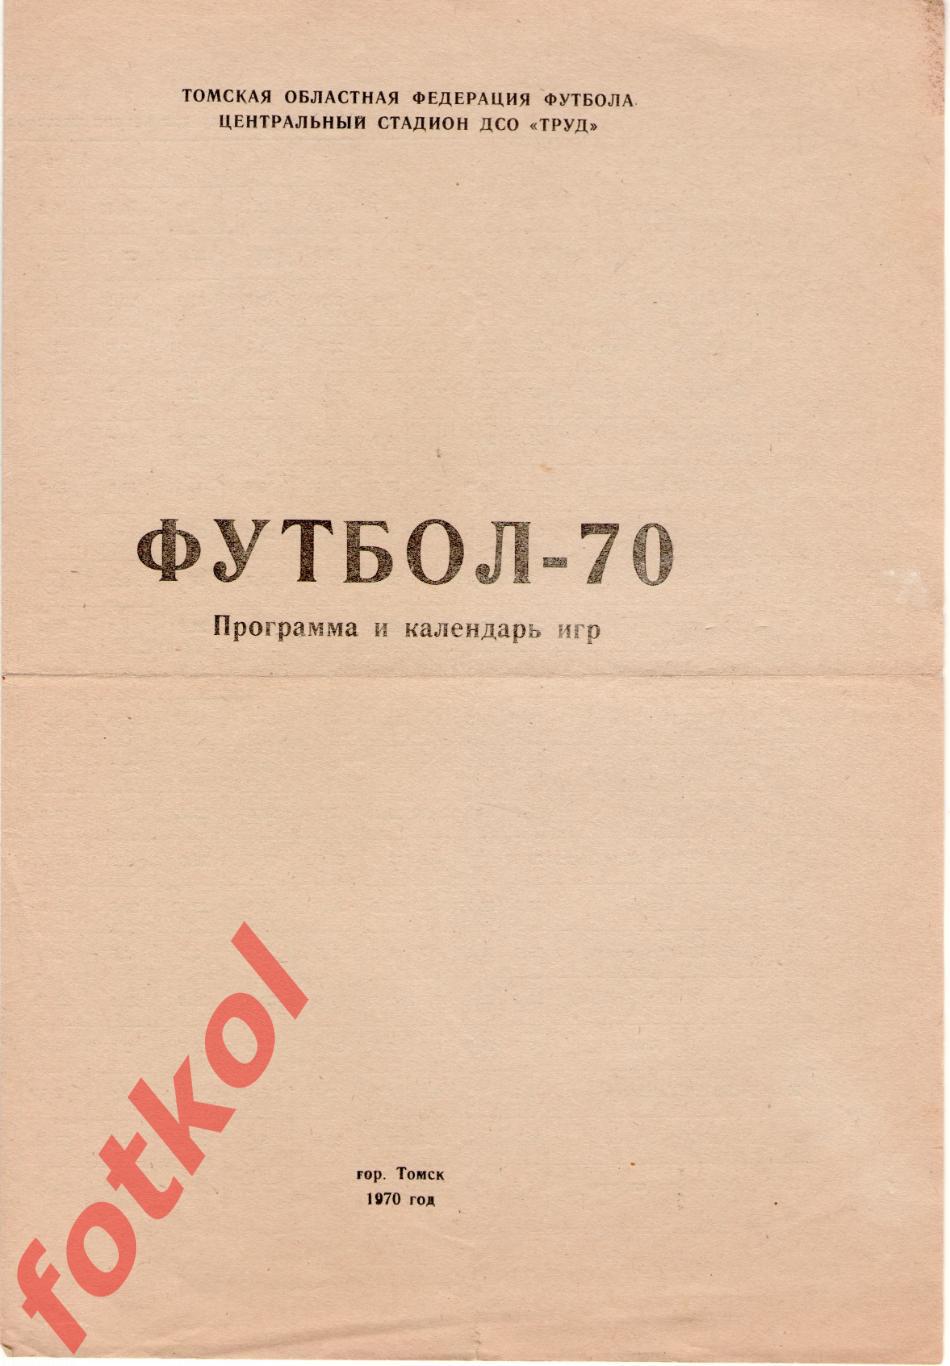 ТОМЛЕС Томск 1970 программа - календарь